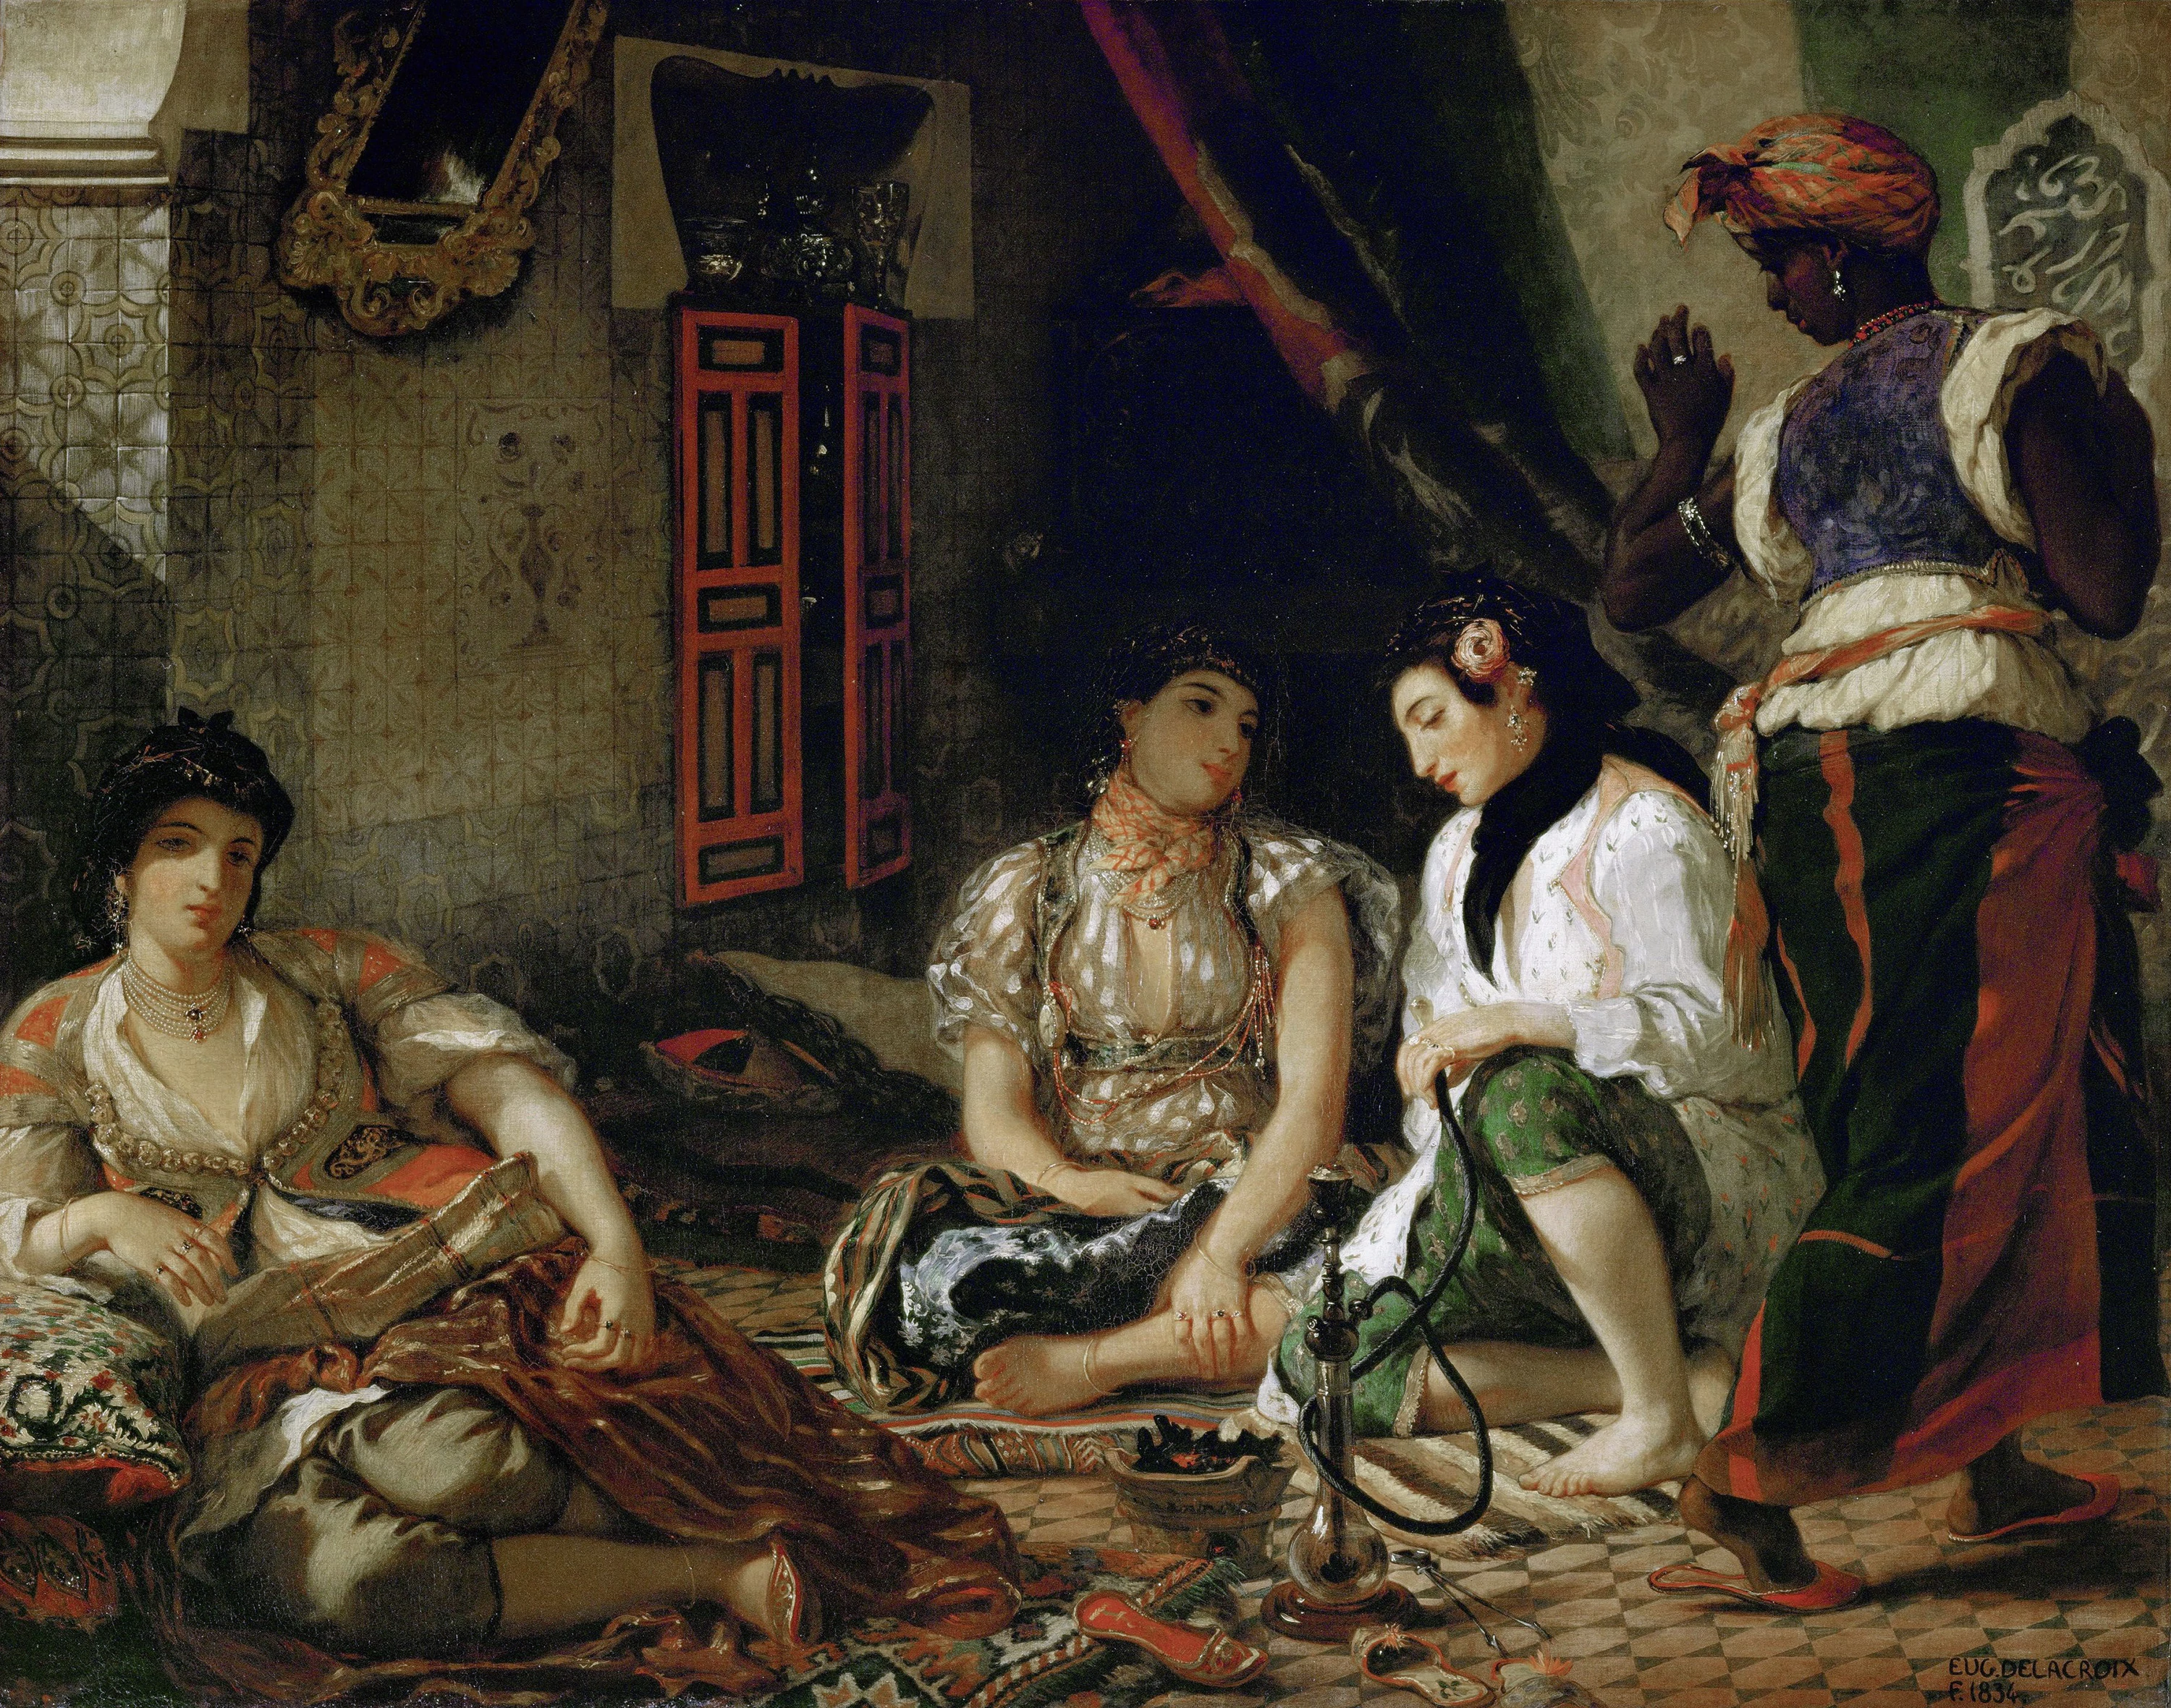 The Women of Algiers, Eugène Delacroix